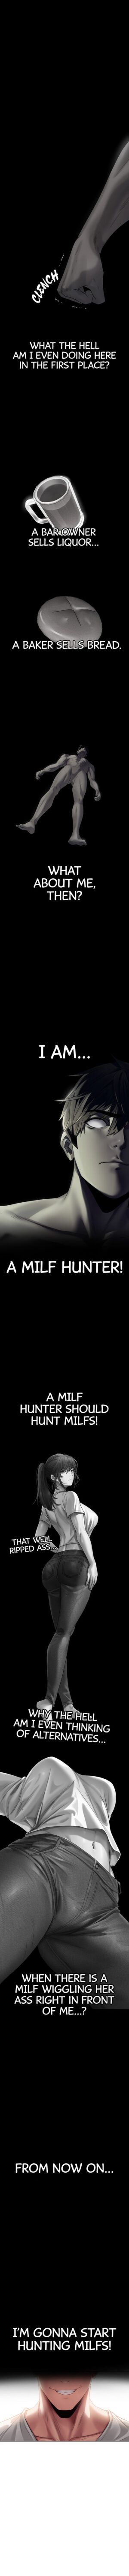 [ERO404 & Yoan & Oh gok Jeon do sa] Milf Hunting in Another World (1-42.5) [English] [Omega Scans] [Hiatus]